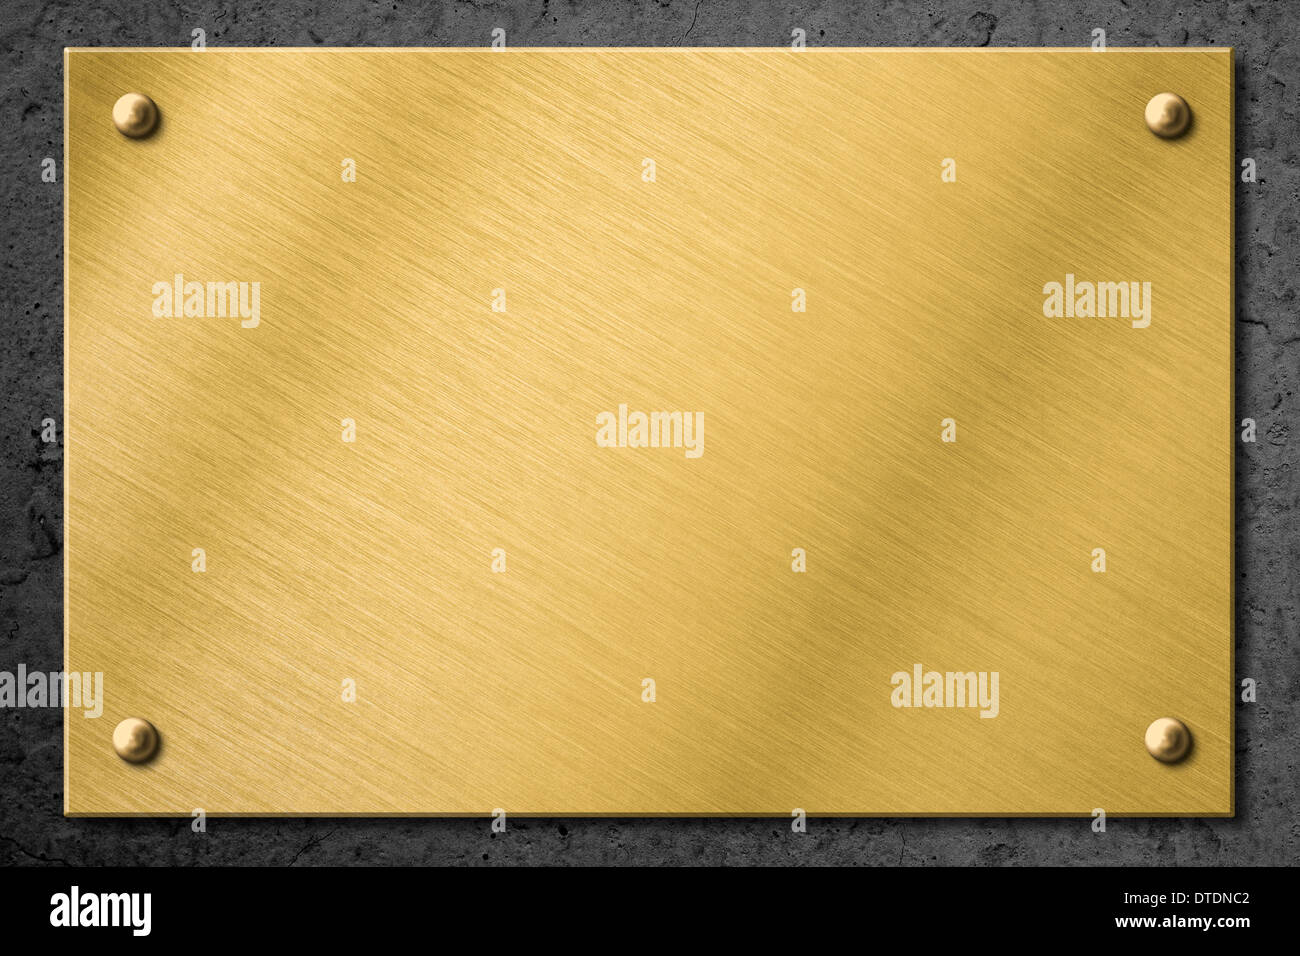 Golden oder Messing Metall-Teller oder Schild an Wand Hintergrund Stockfoto